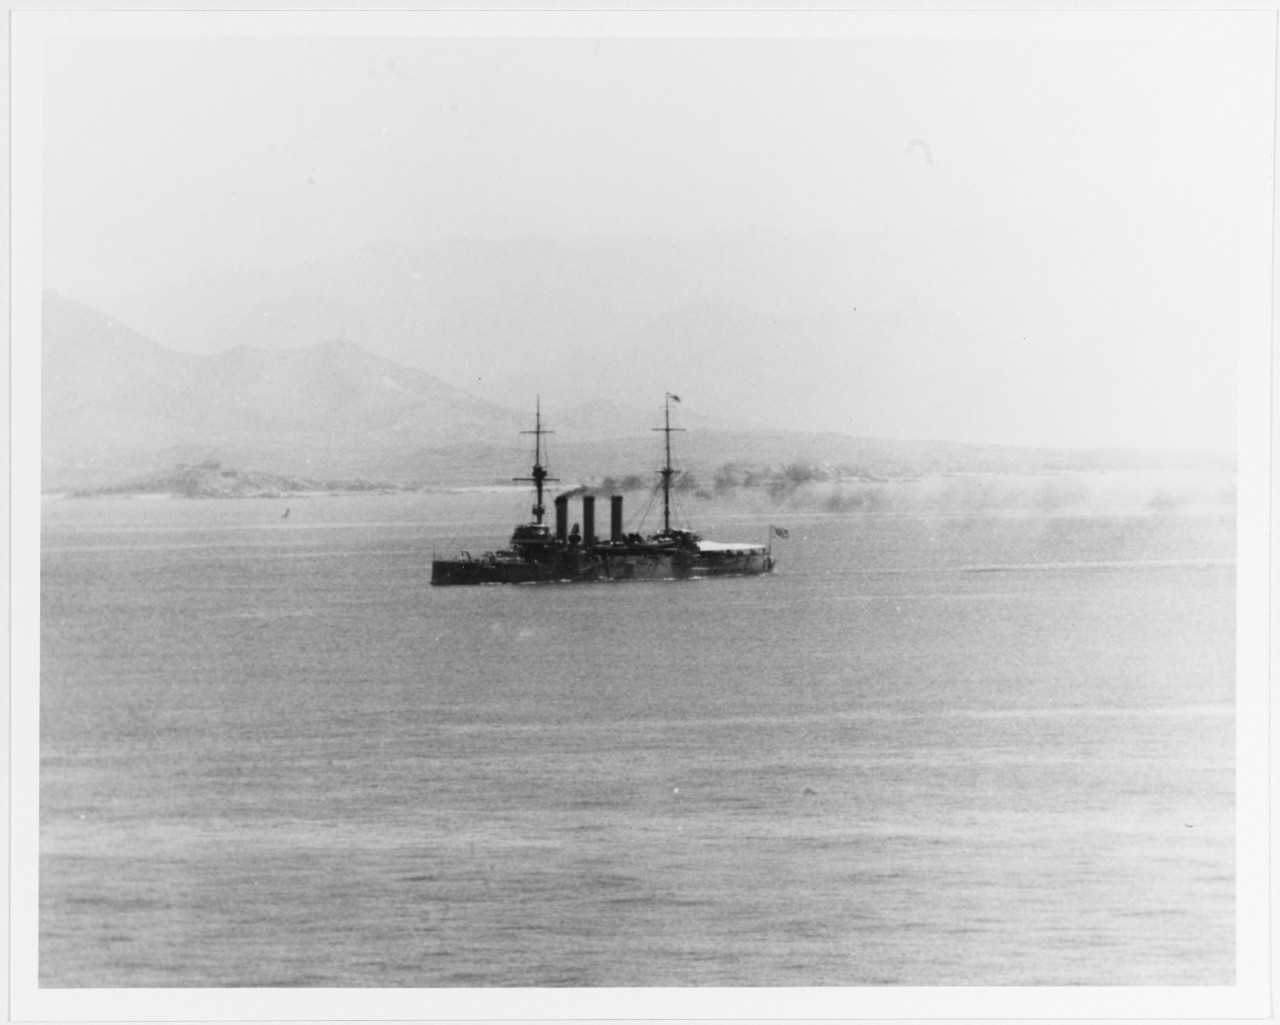 IWATE (Japanese cruiser, 1901-1945)